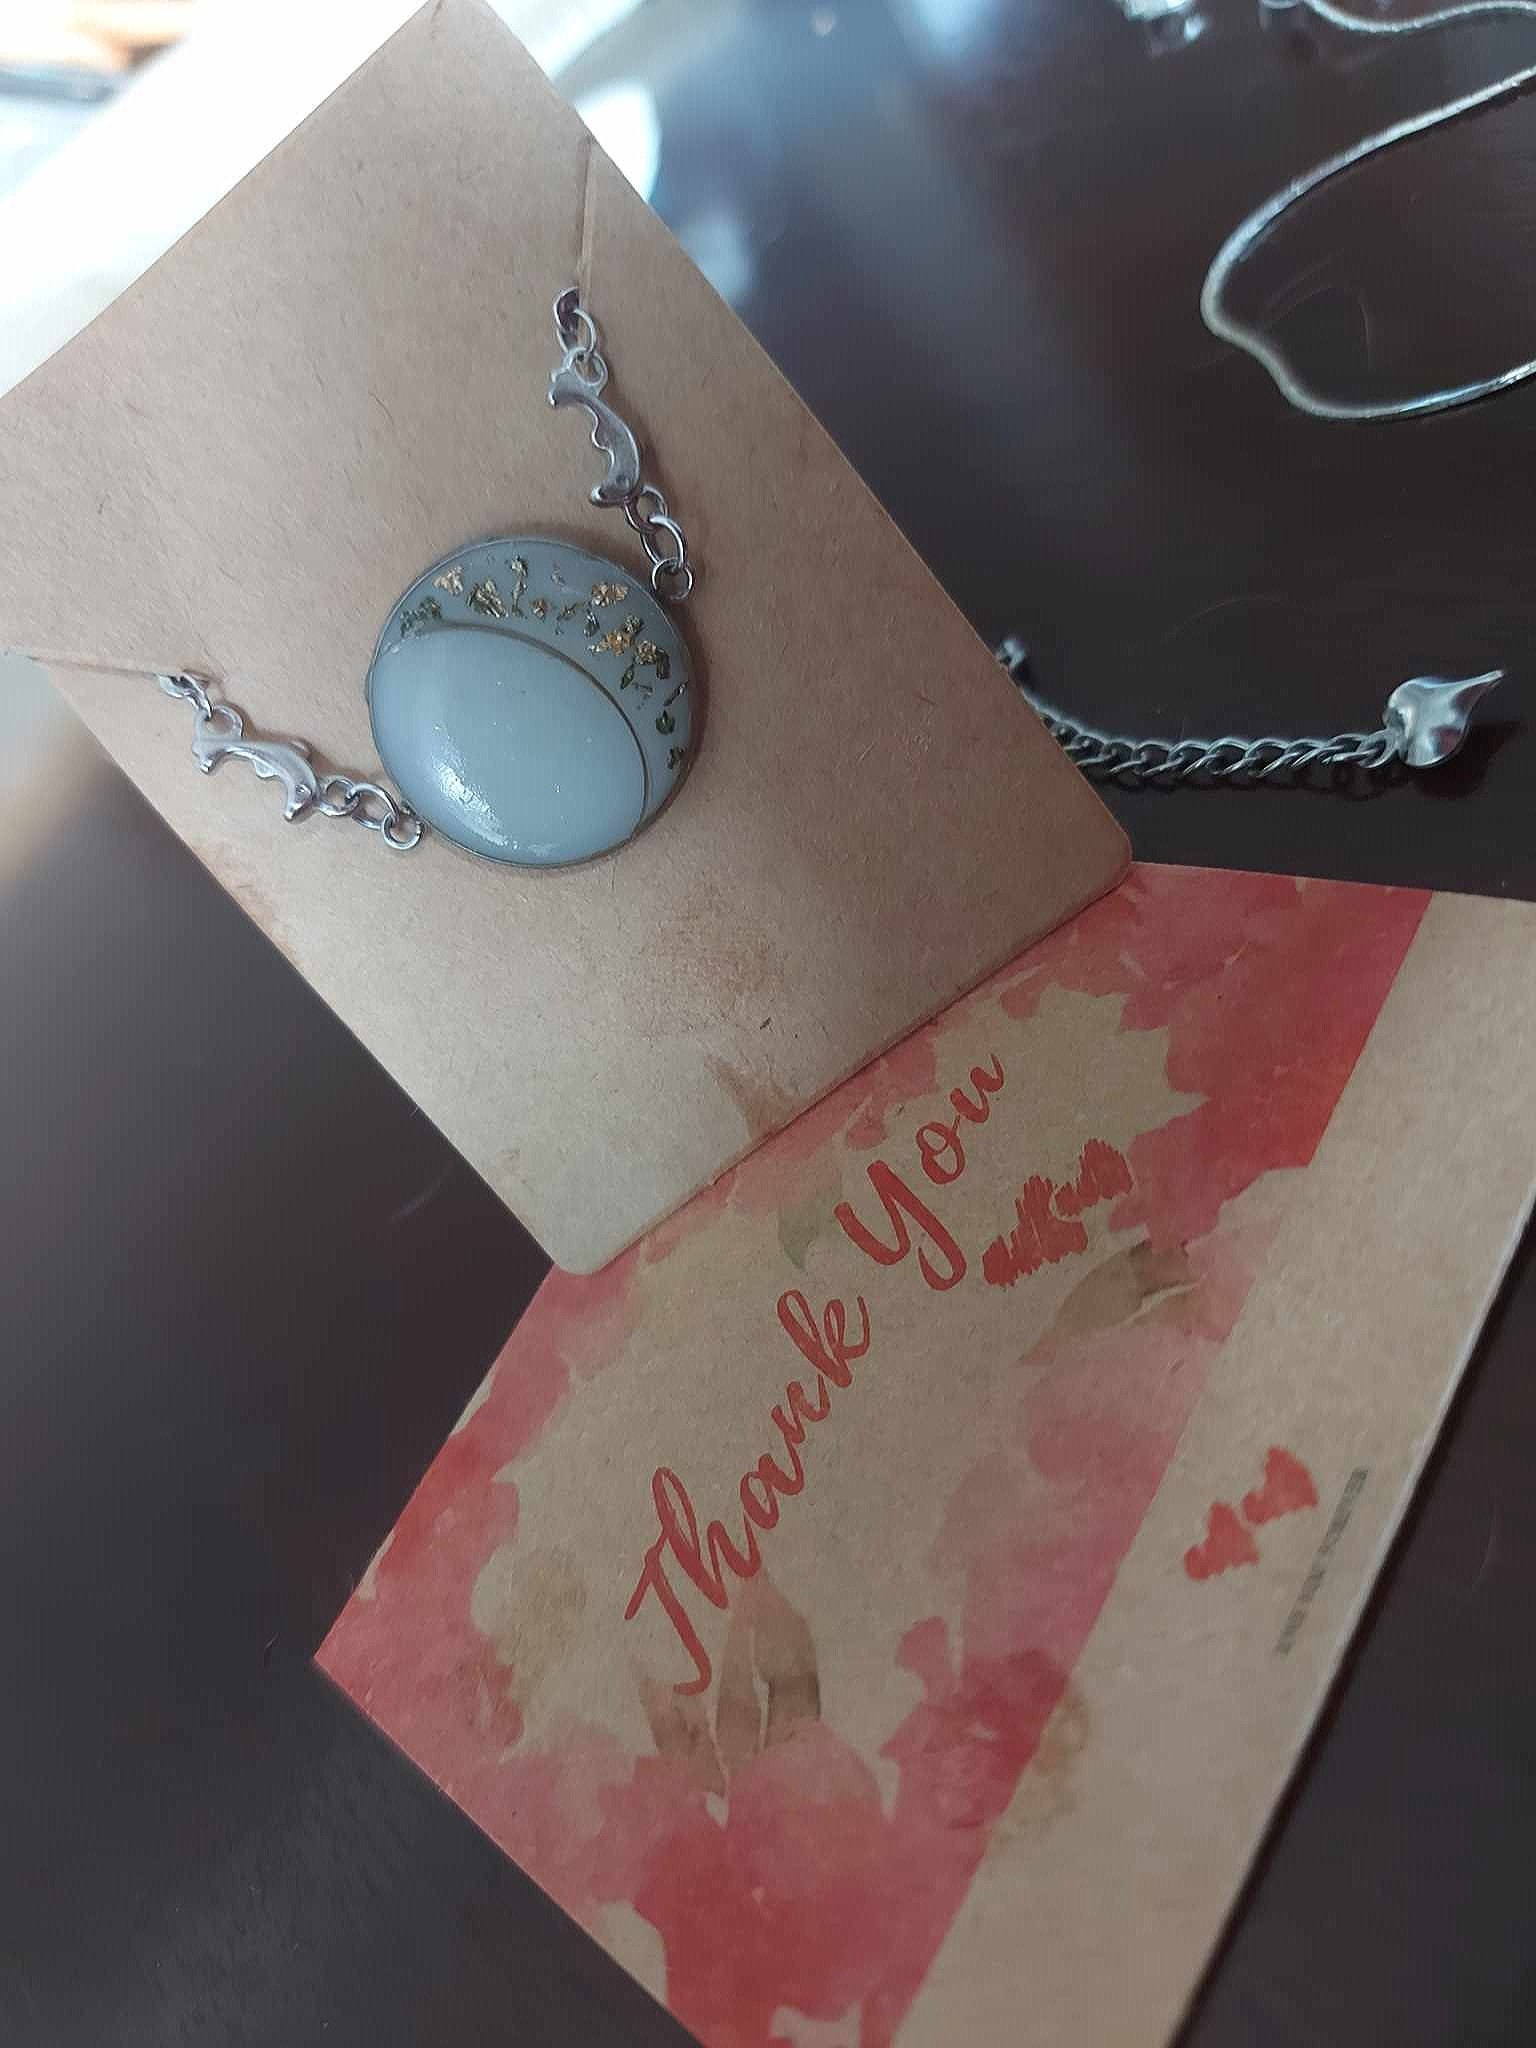 Breastmilk and DNA jewelry DIY kits – White heart keepsakes